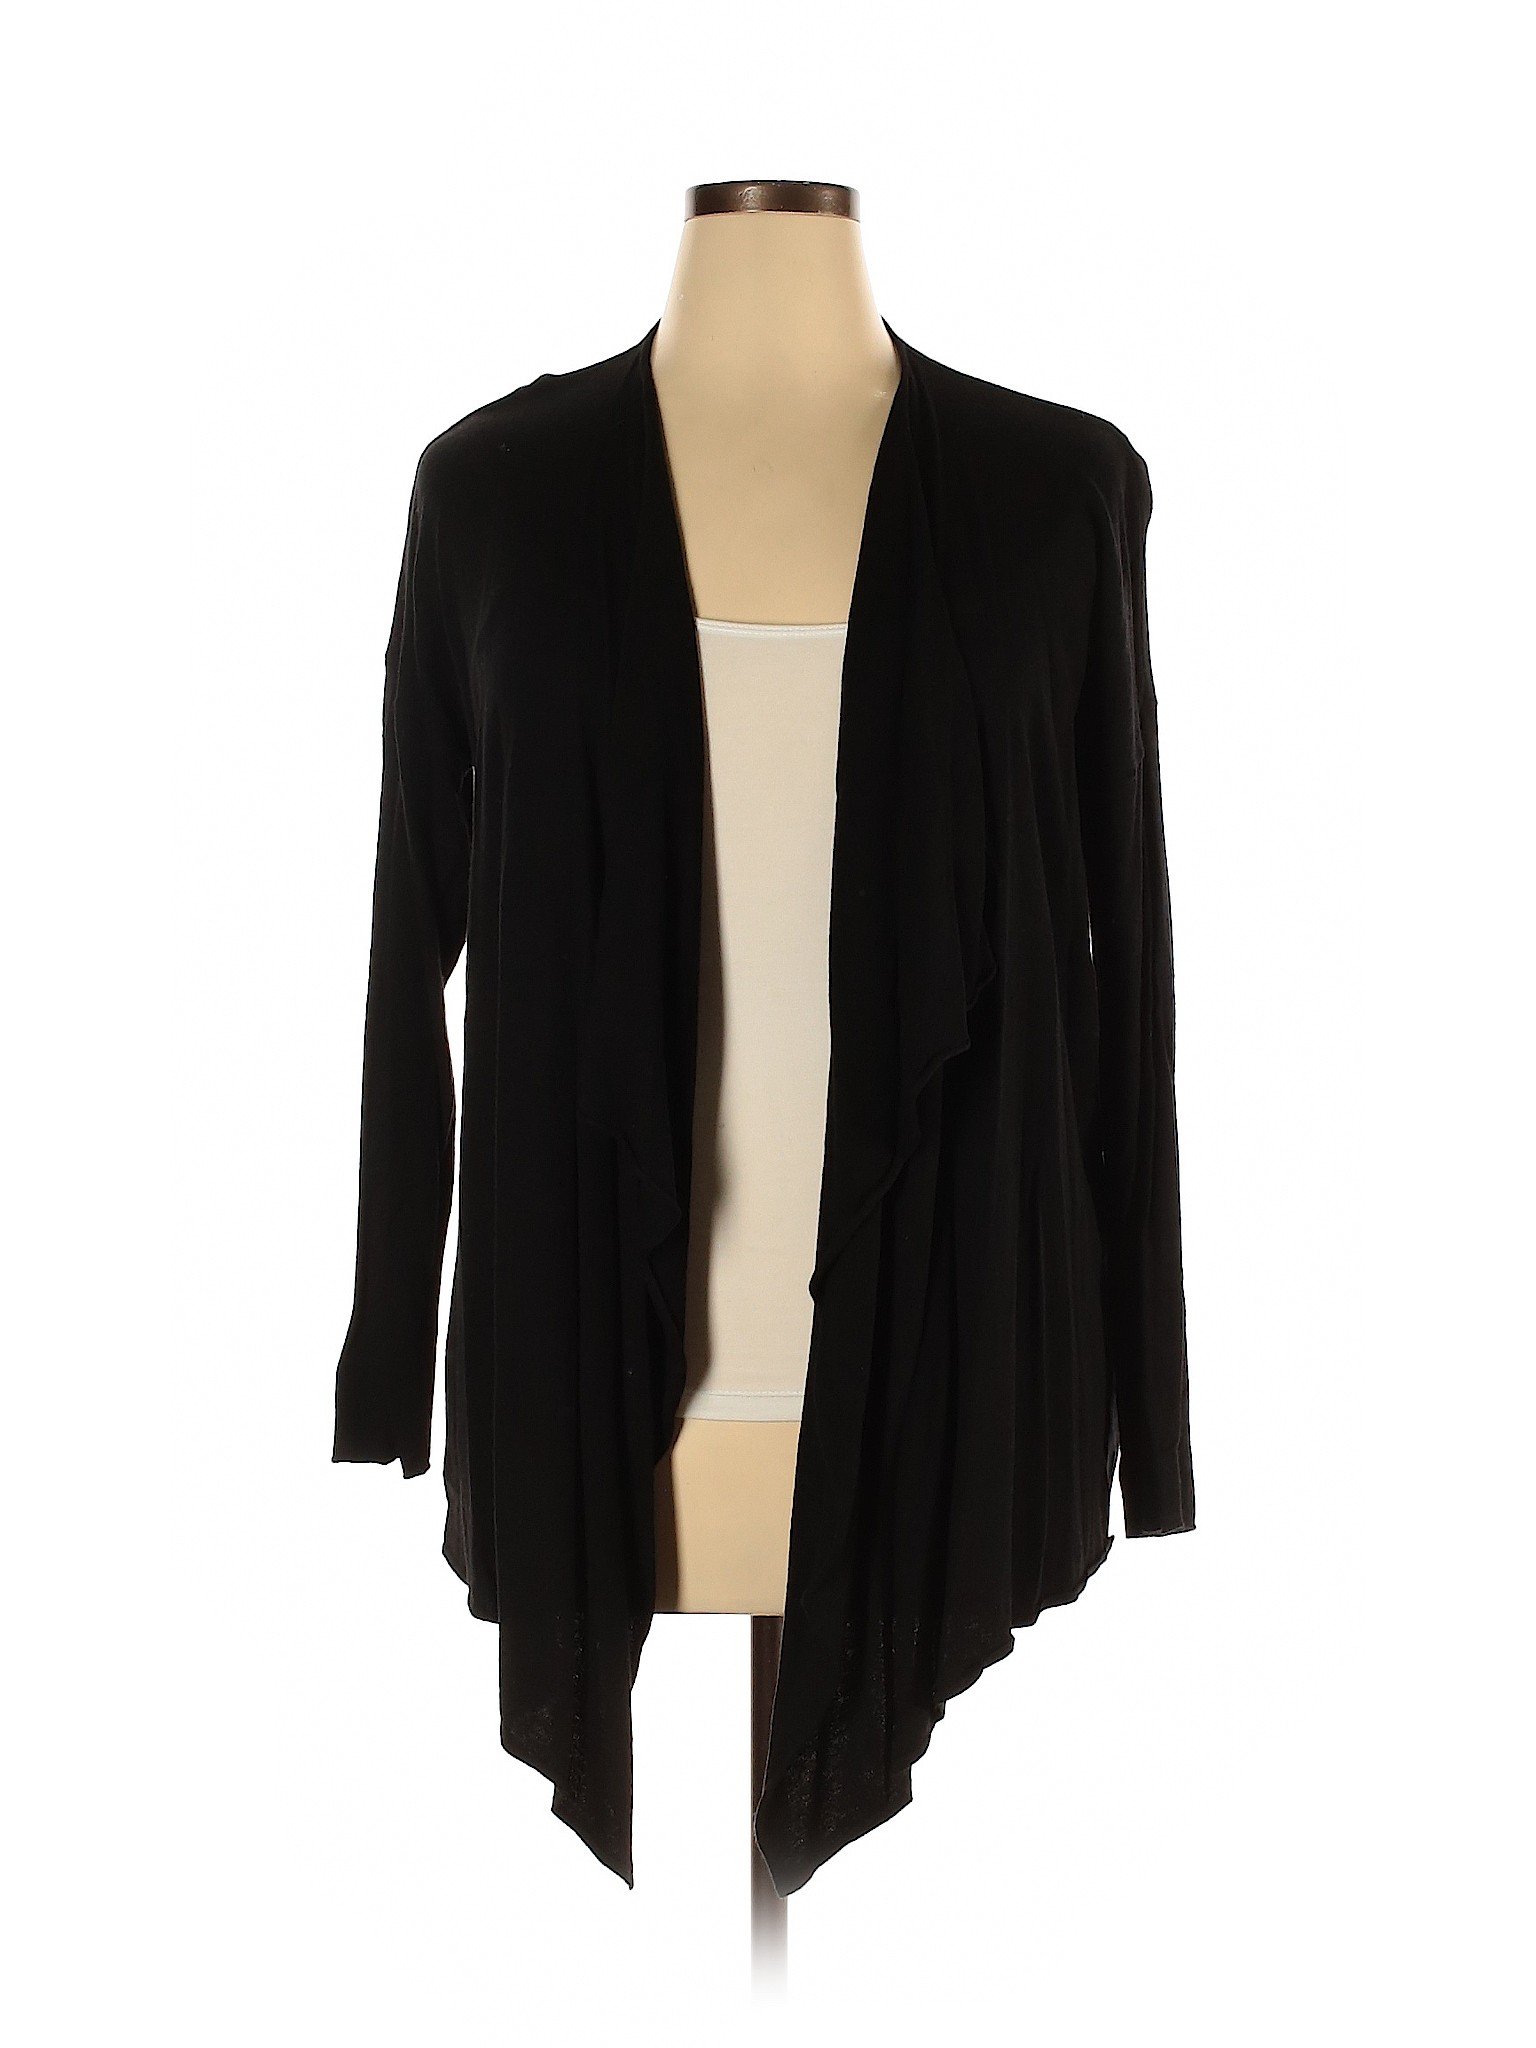 H&M Women Black Cardigan XL | eBay